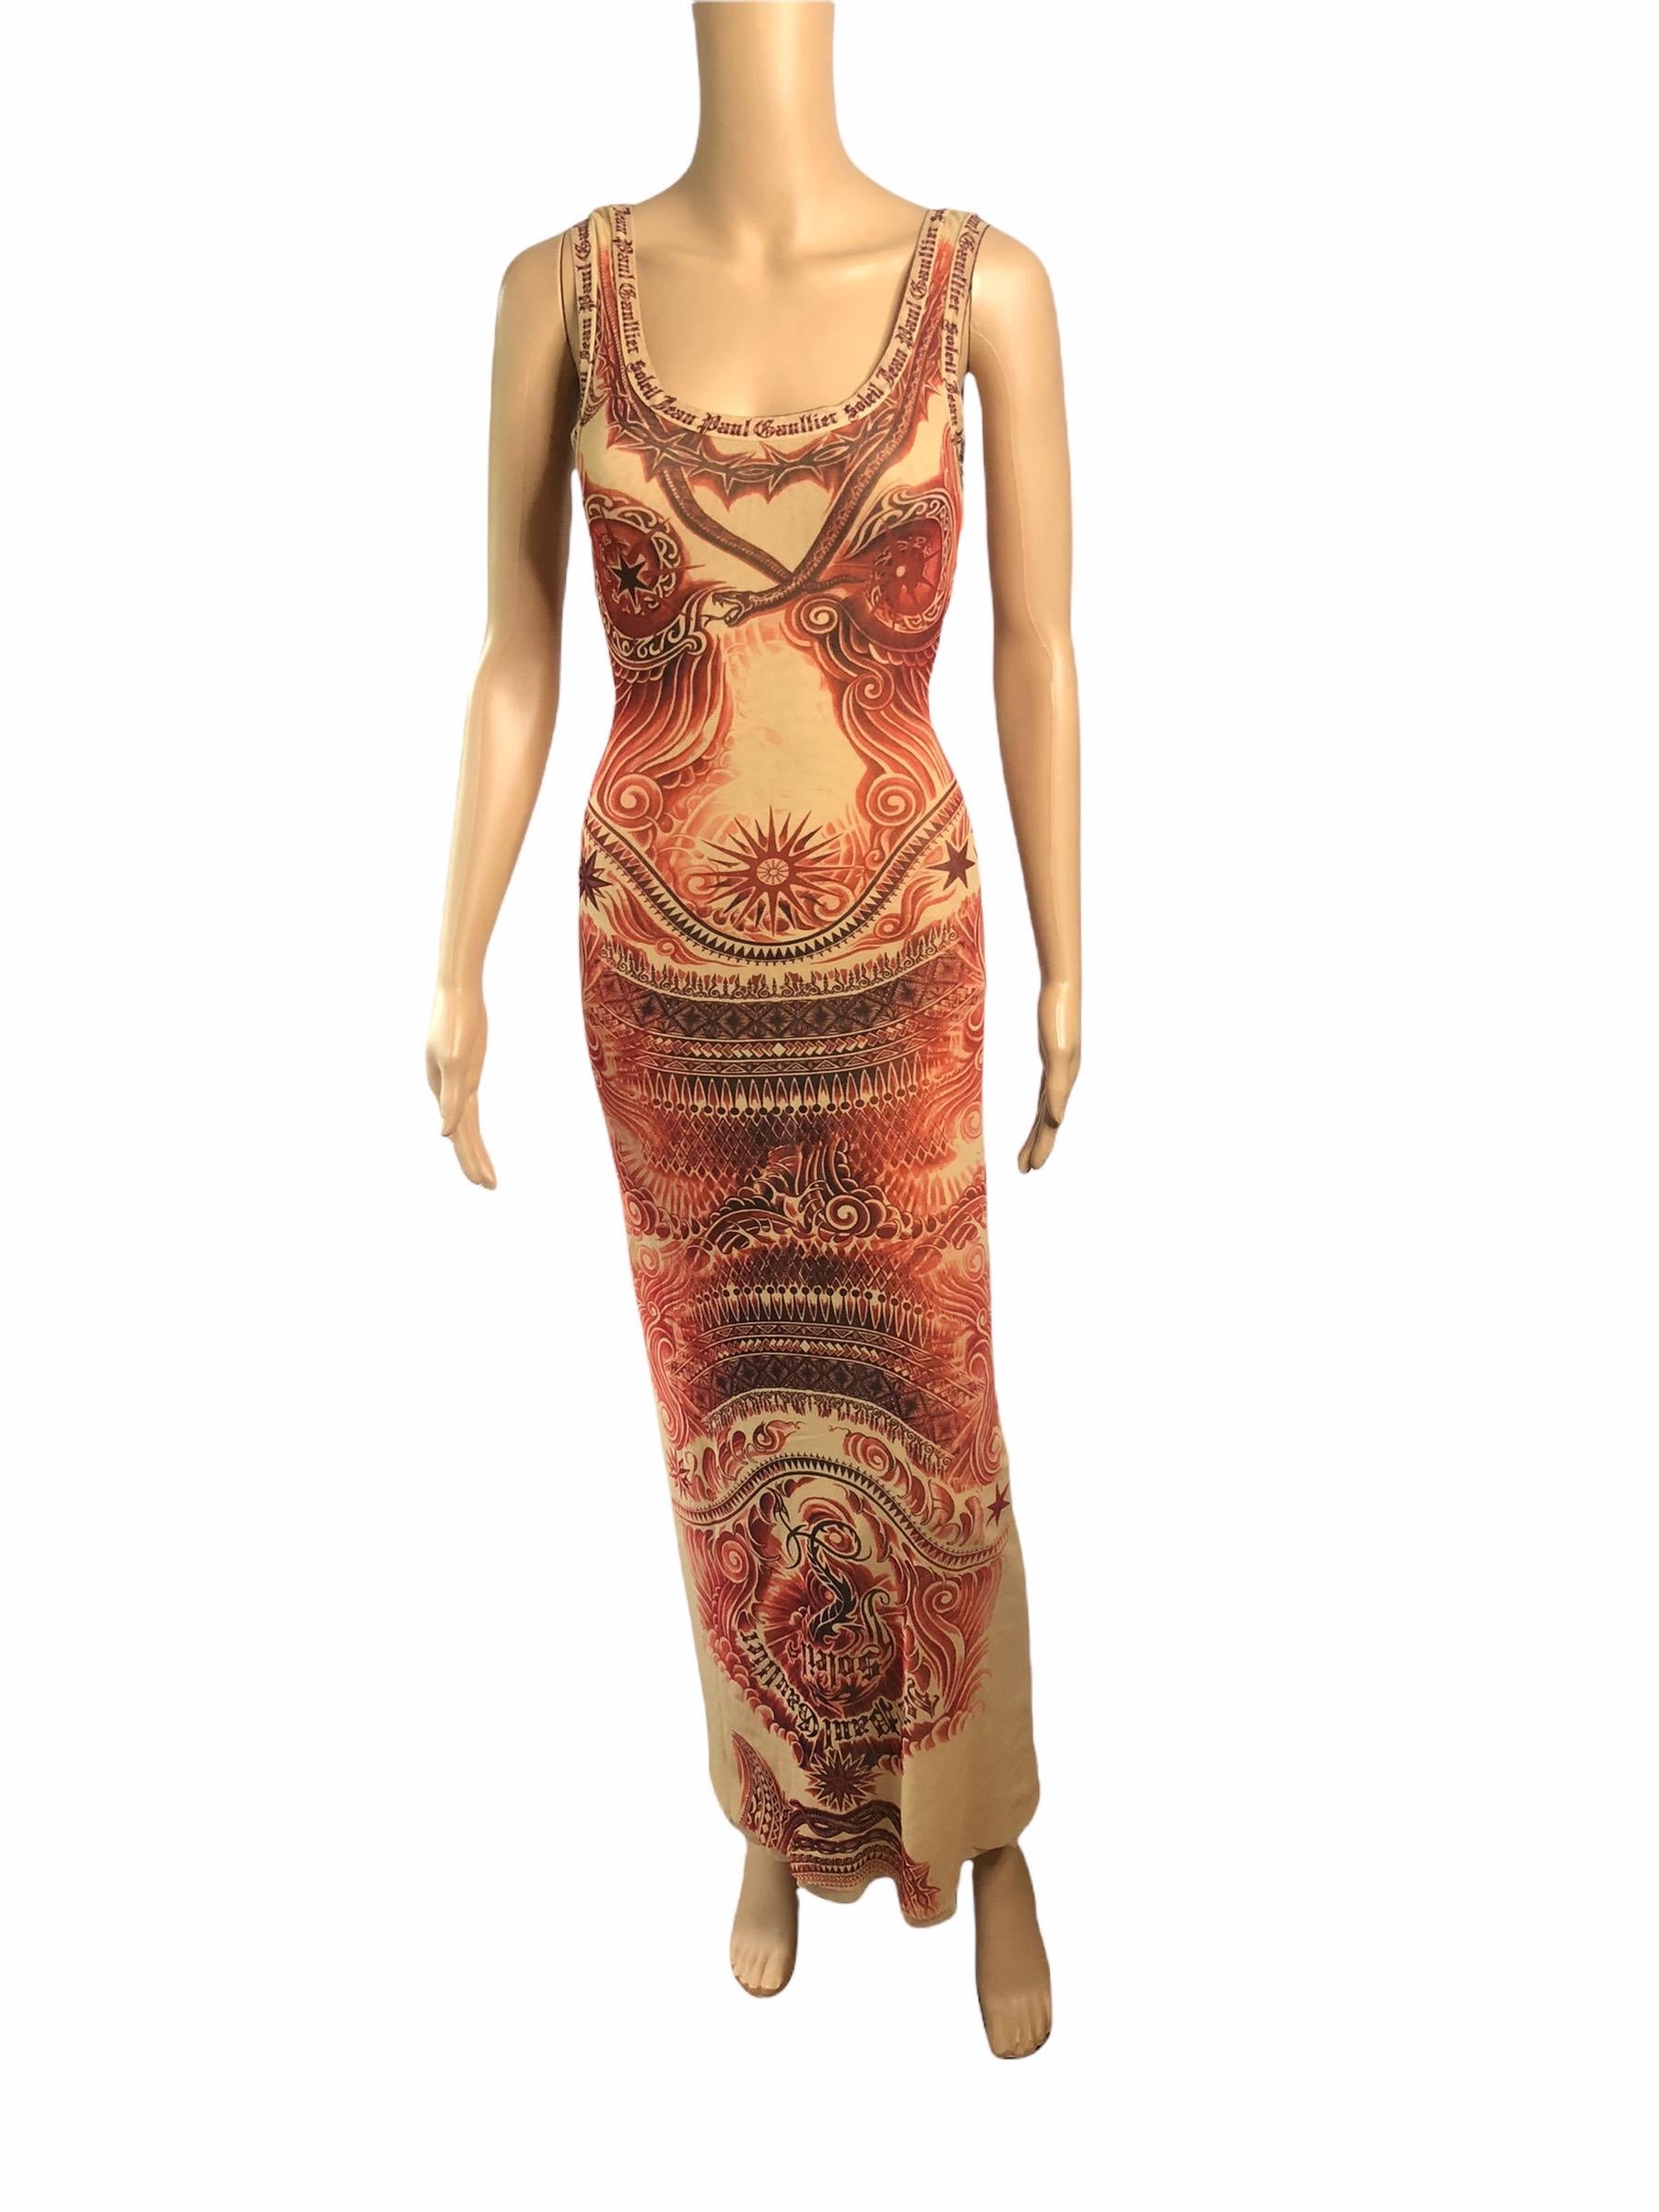 Jean Paul Gaultier Soleil Vintage Tattoo Bodycon Mesh Bolero Dress 2 Piece Set For Sale 2